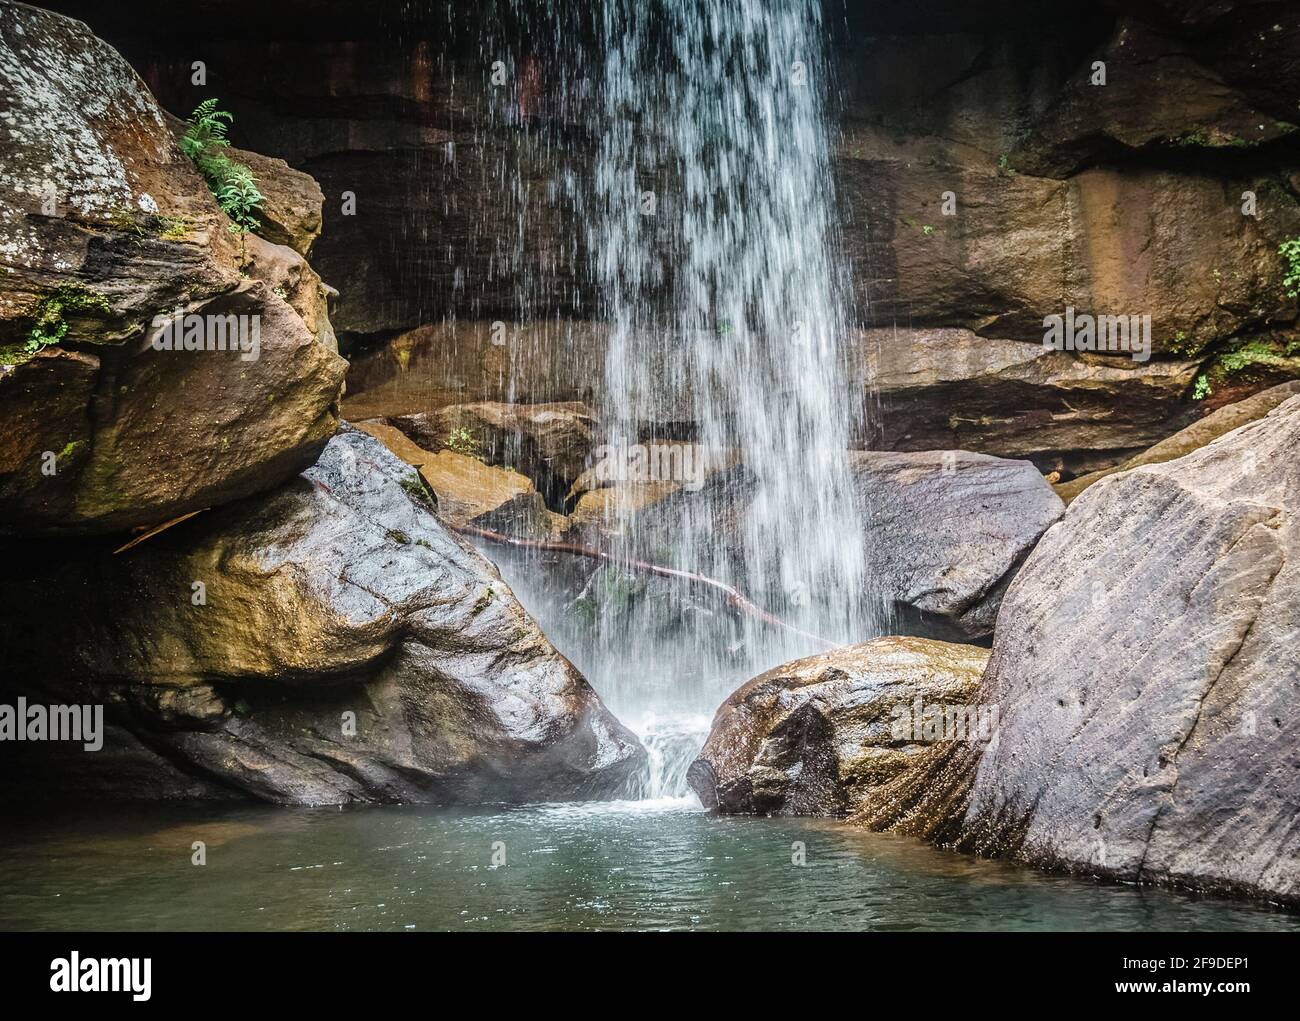 Waterfall near body of Water Stock Photo